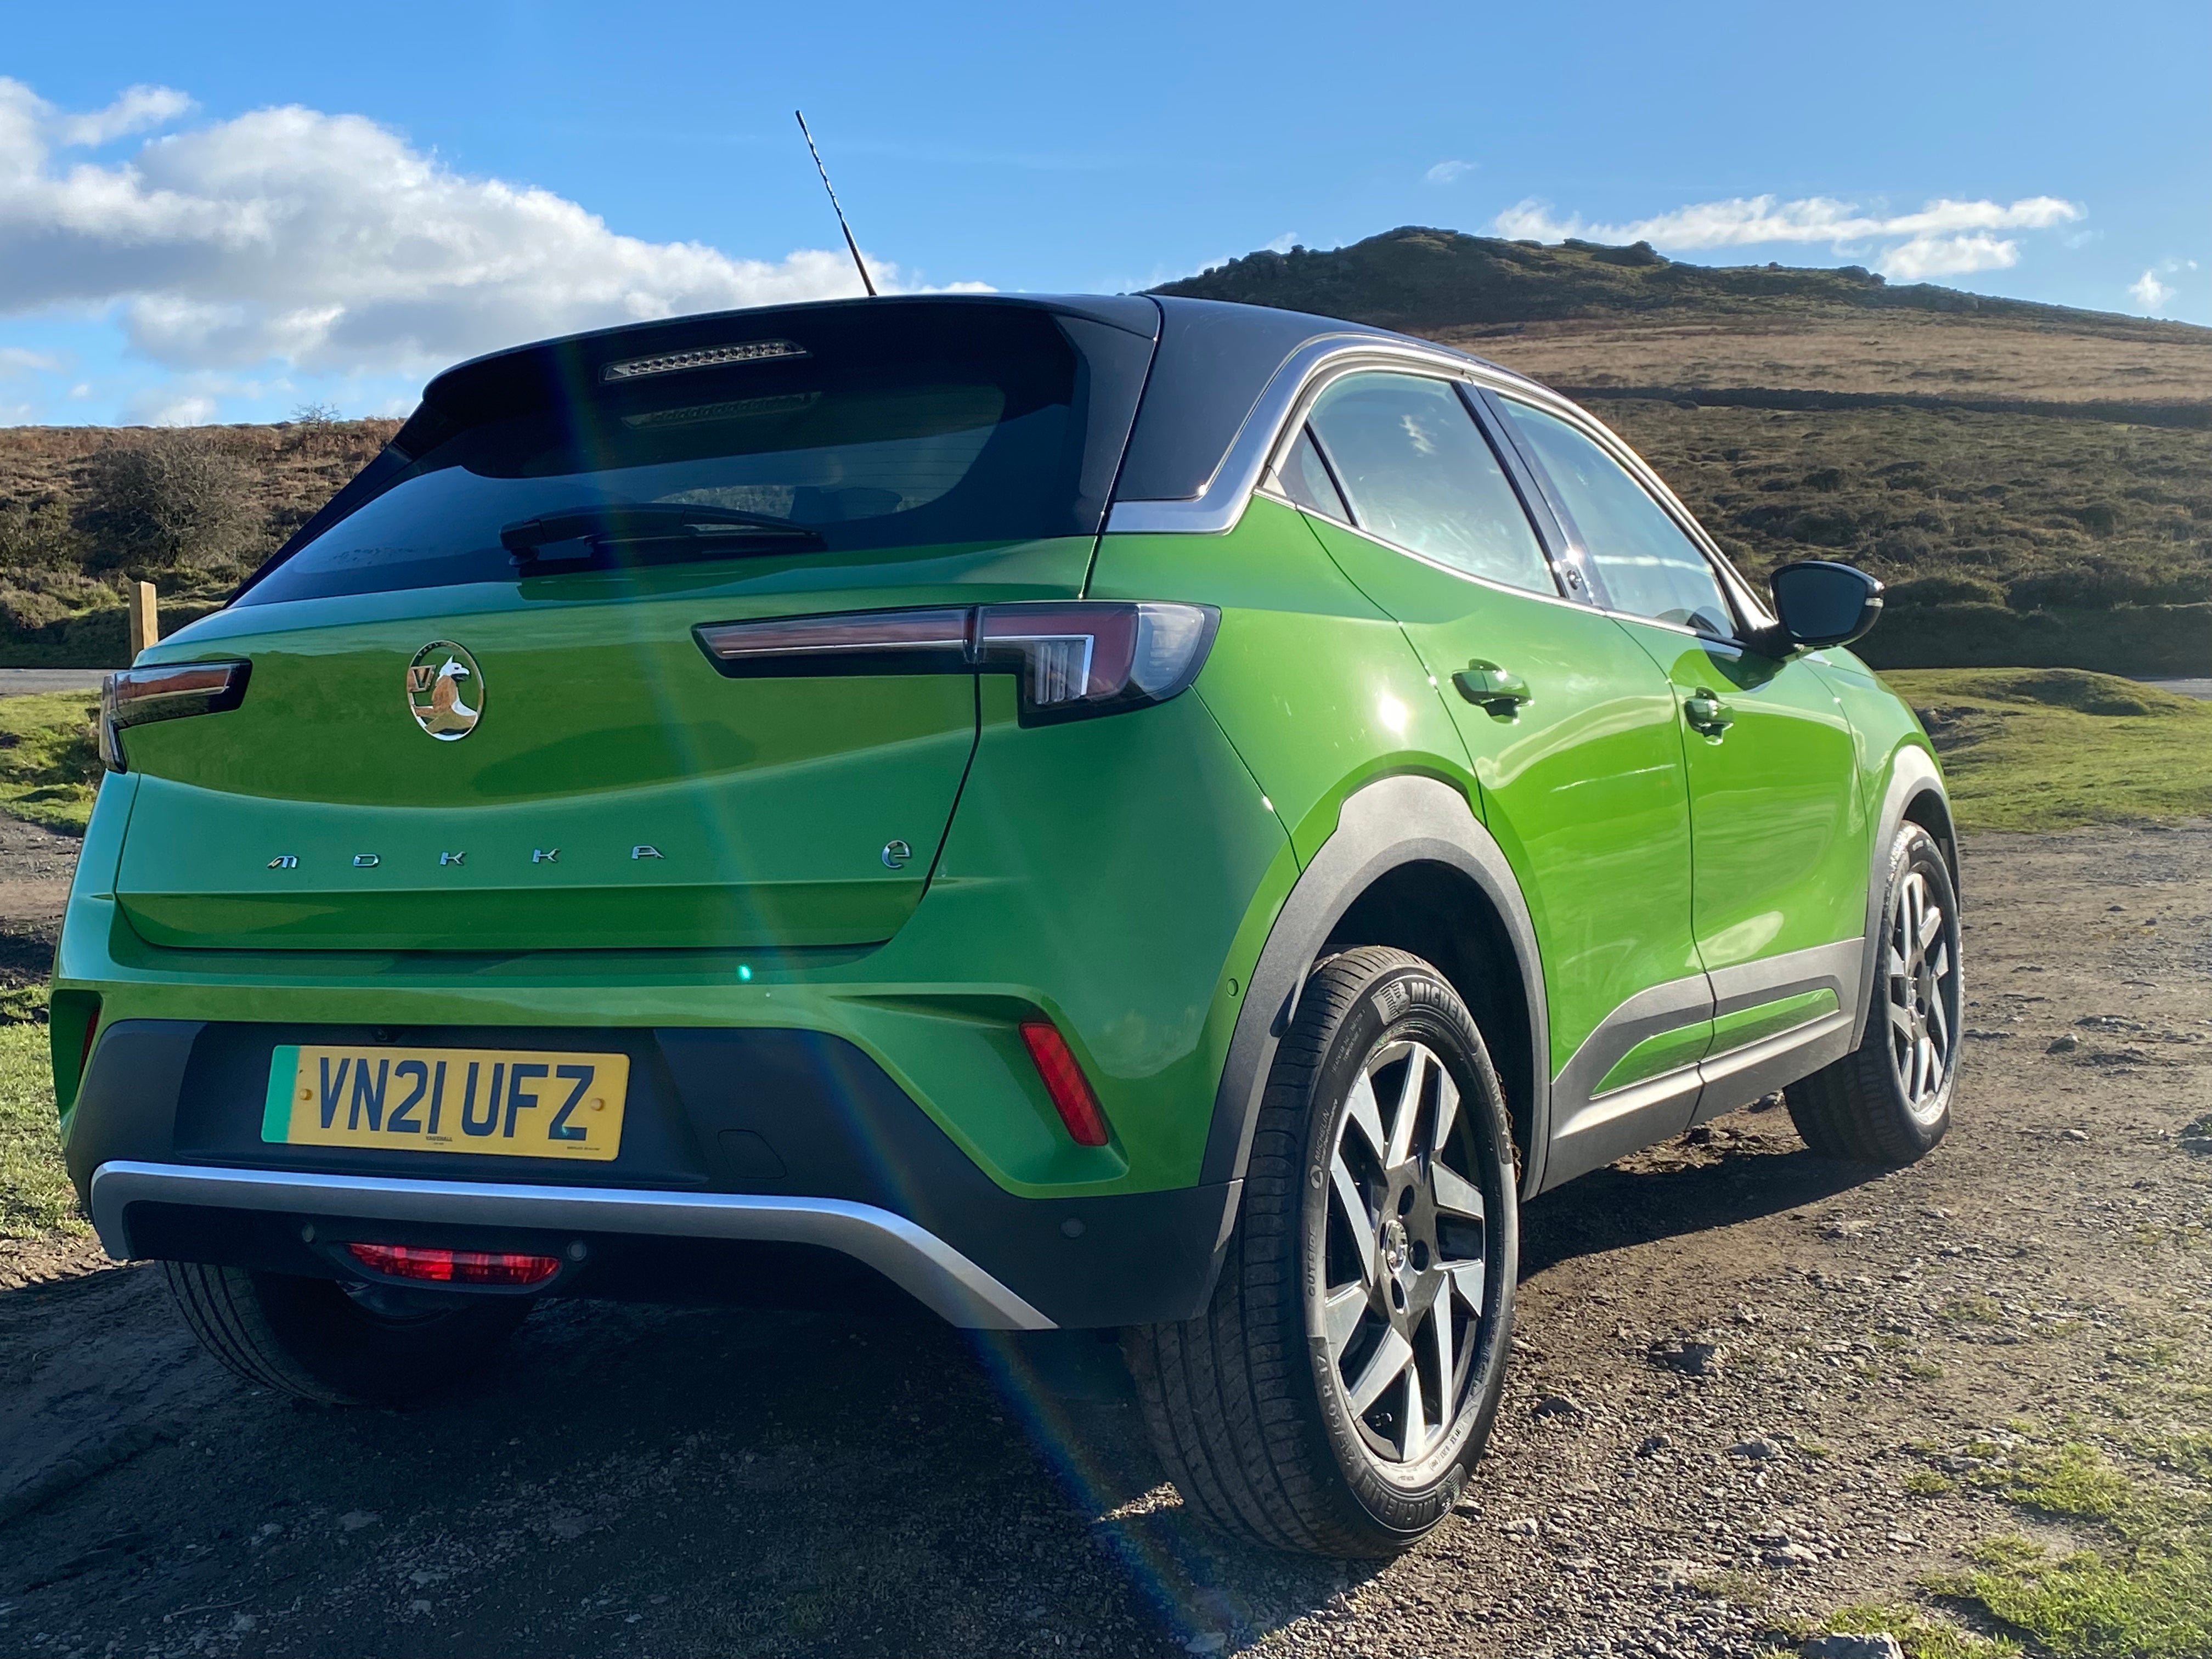 The new all-electric Vauxhall Mokka-e shines amid Dartmoor’s dramatic landscape.